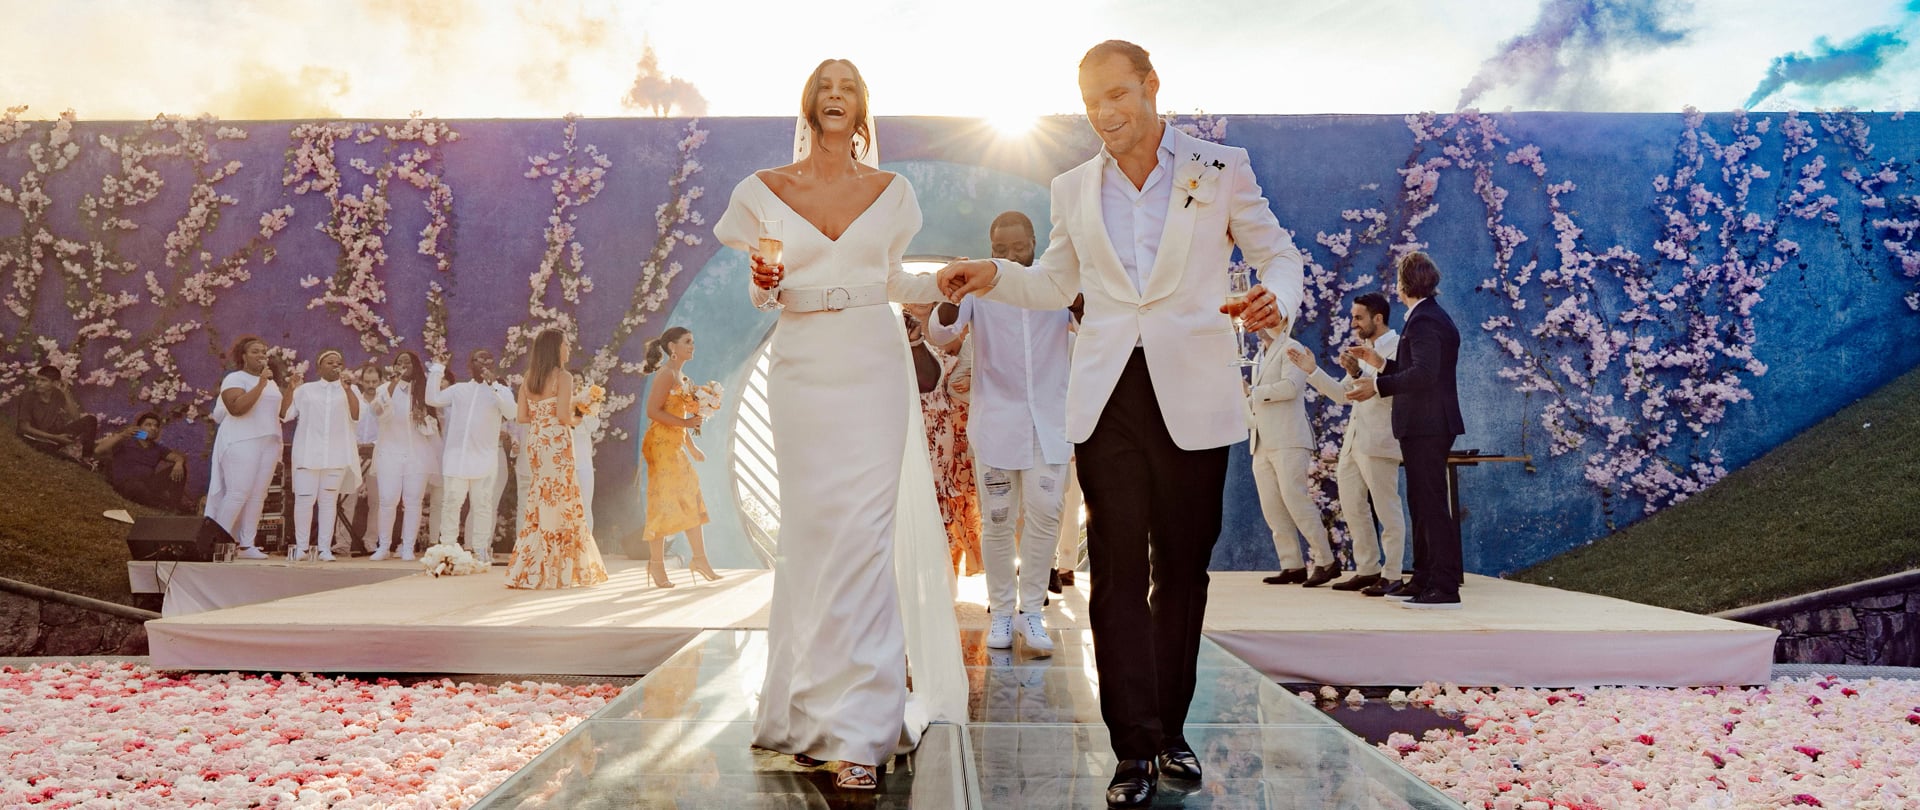 Charlotte & Tom Wedding Video Filmed atCareyes,Mexico